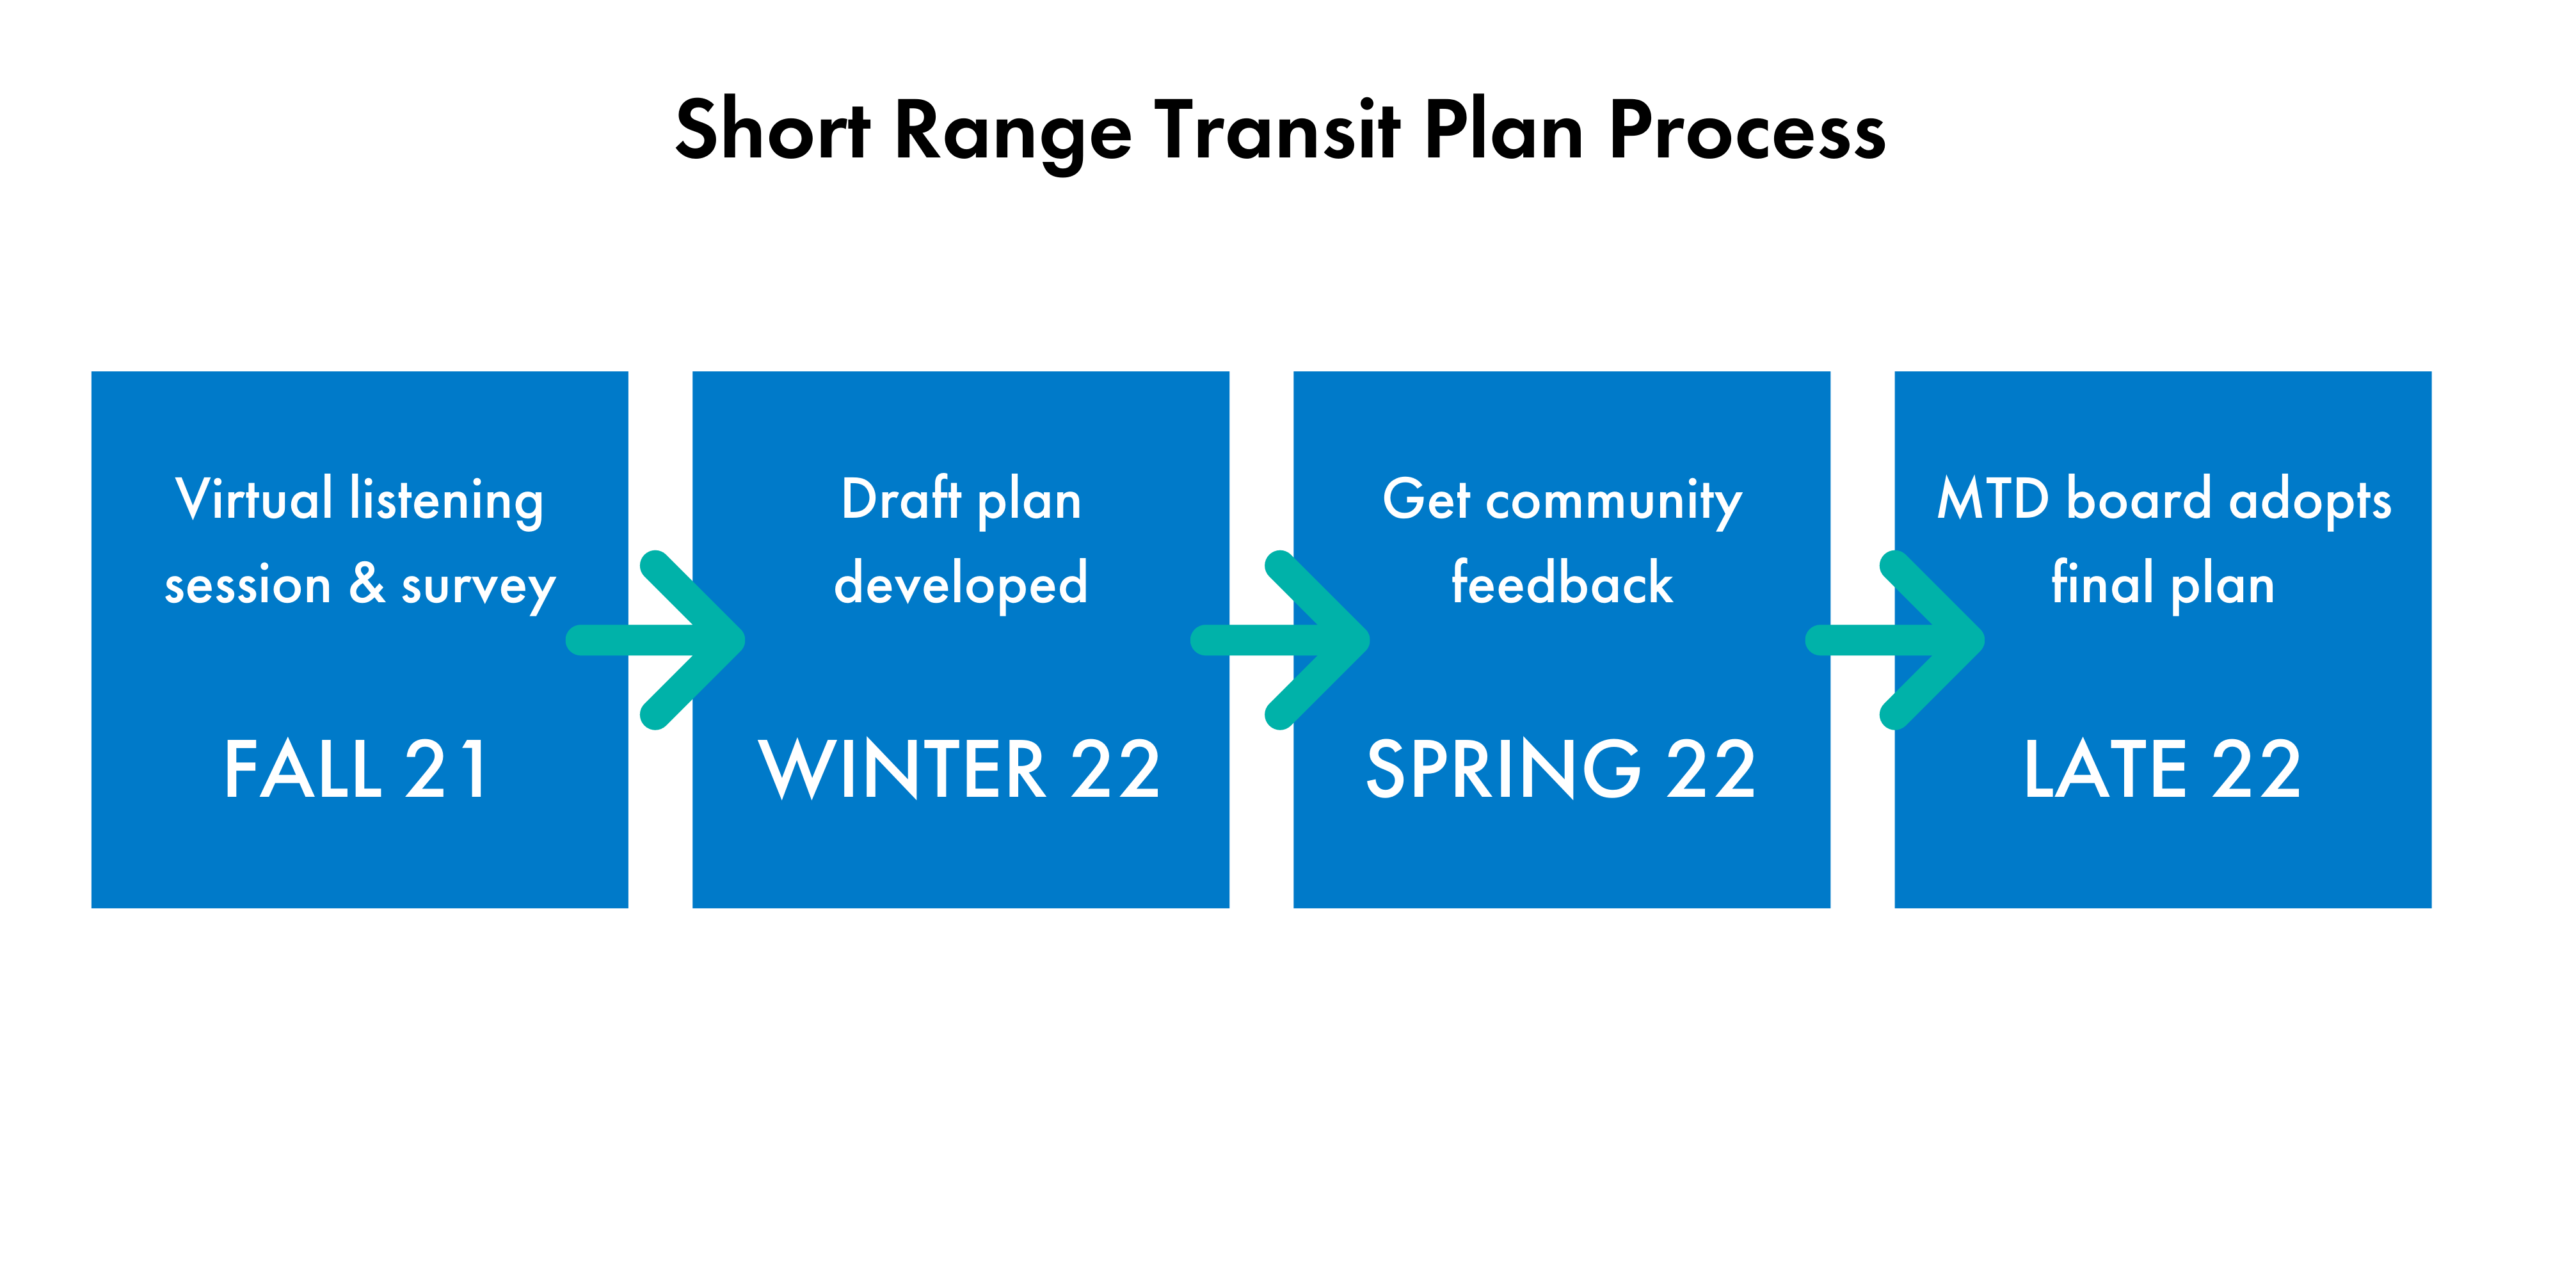 Short Range Transit Plan Process Flow chart reads "virtual listening session & survey: Fall 21" "Draft plan developed Winter 22" "Get community feedback Spring 22" and "MTD board adopts final plan Late 22" 